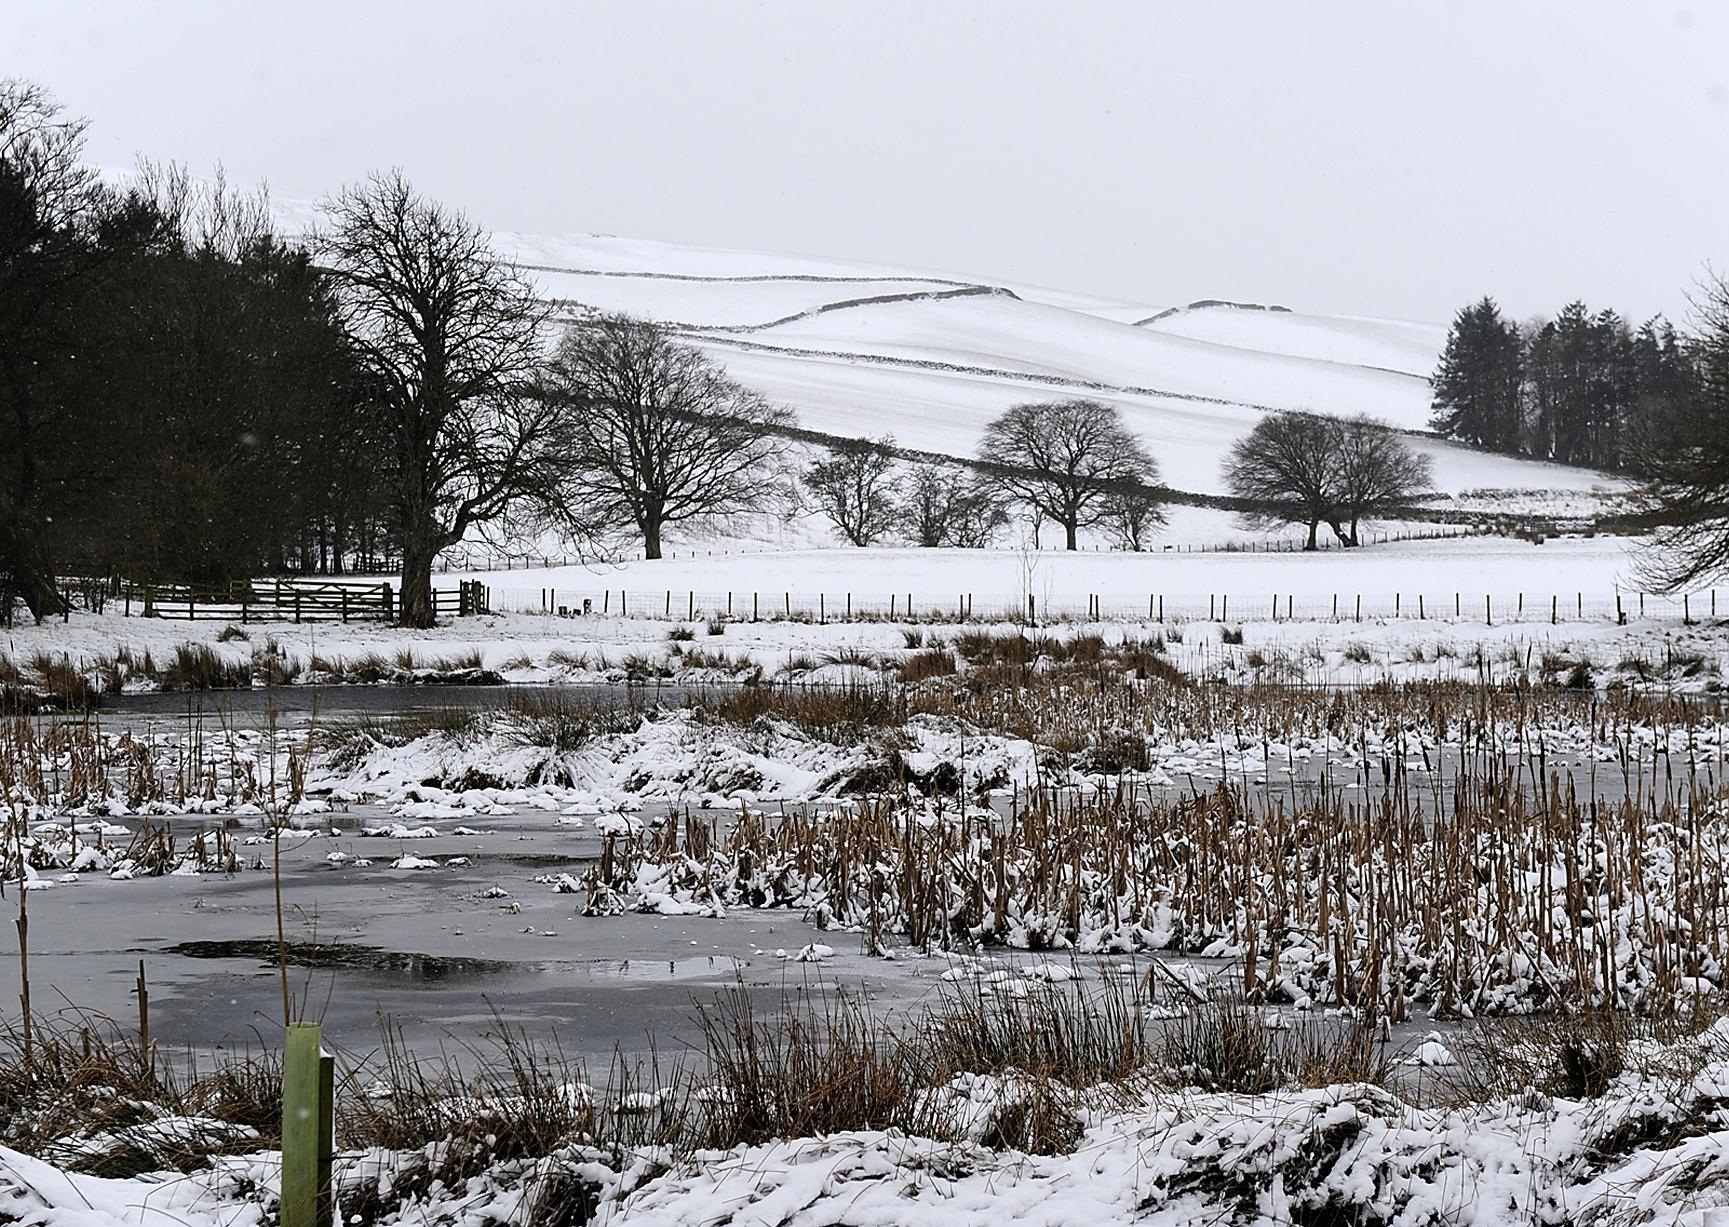 Snow covers the ground near Ettrickbridge, Selkirk.